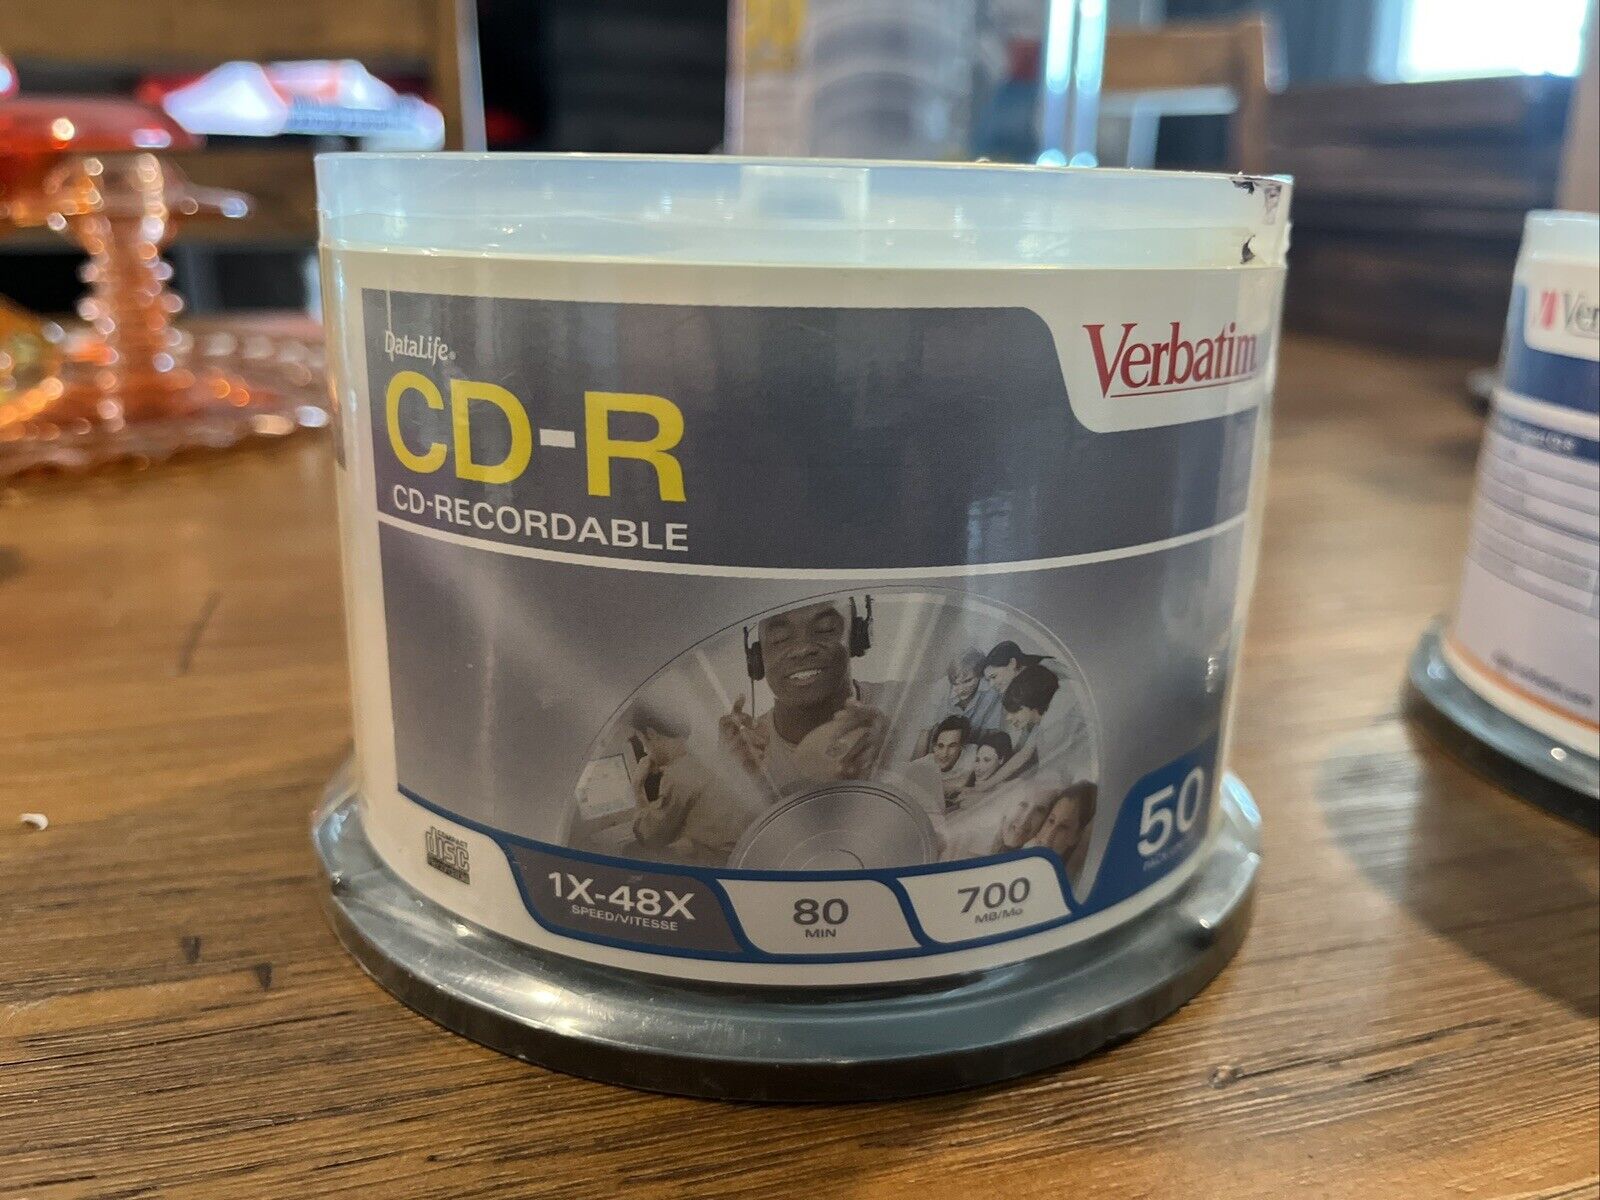 Verbatim  50 Pack Discs CD-R 700mb 1x-48 Compatible Burn Music photos data